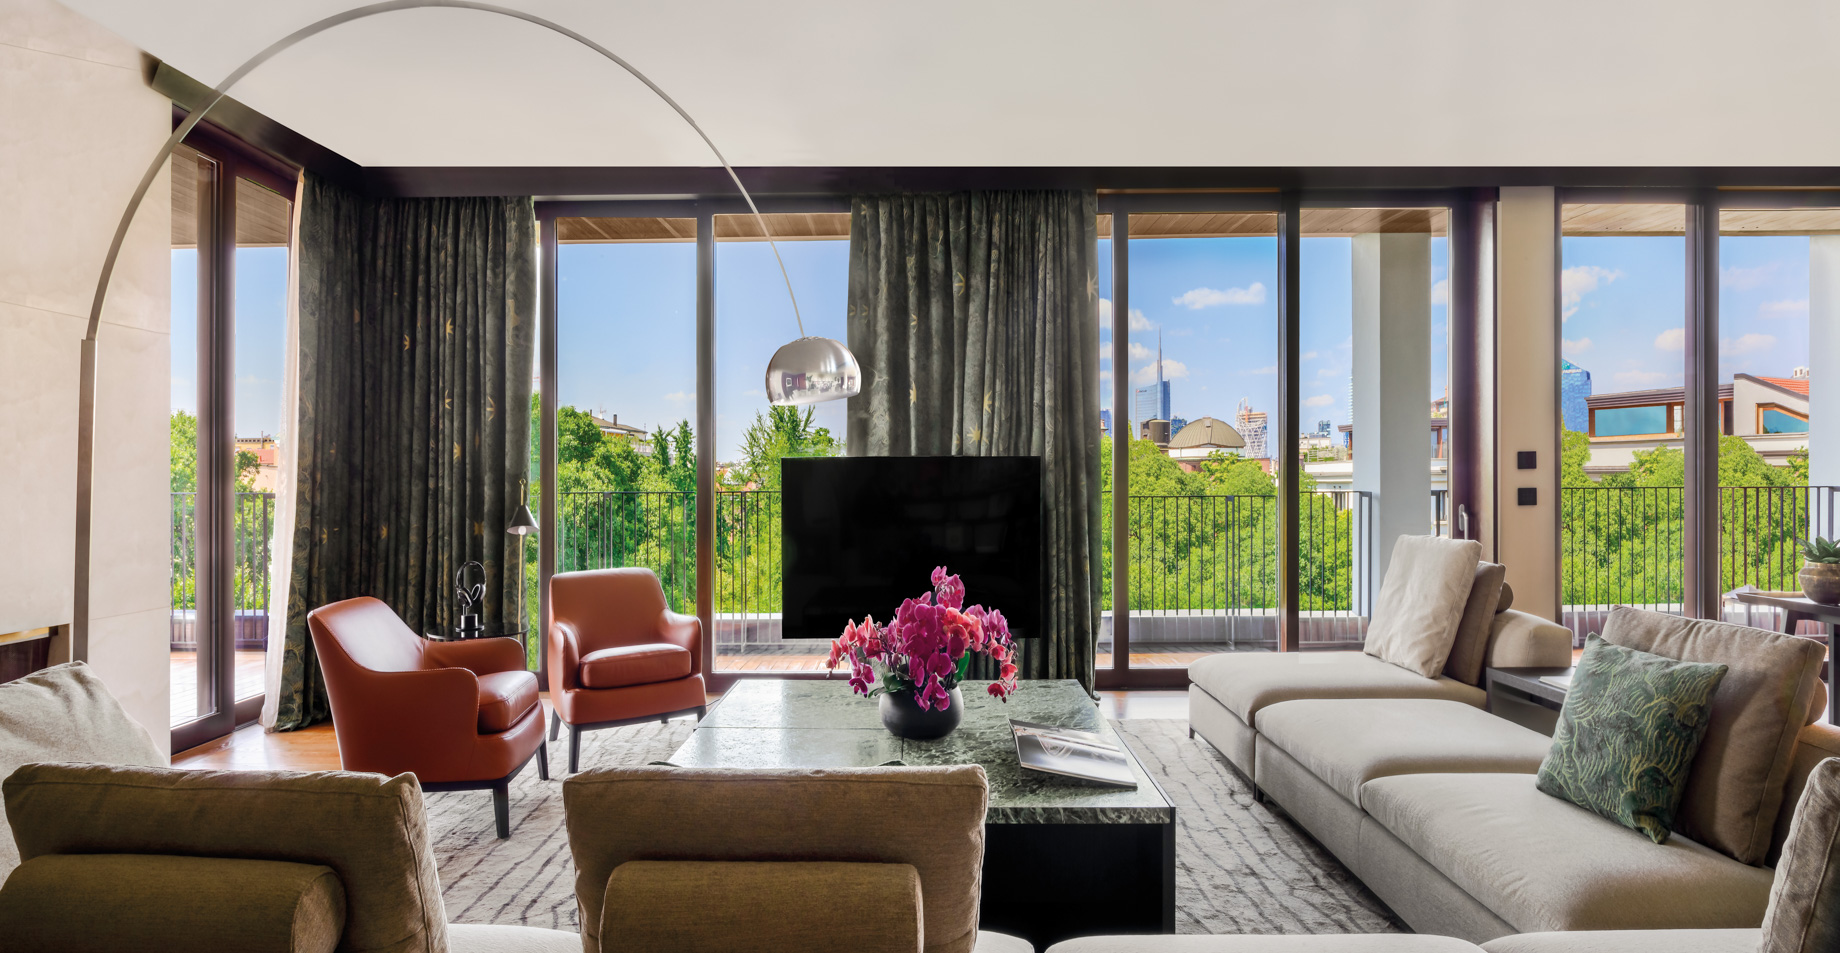 Bvlgari Hotel Milano – Milan, Italy – Bvlgari Suite Living Room View